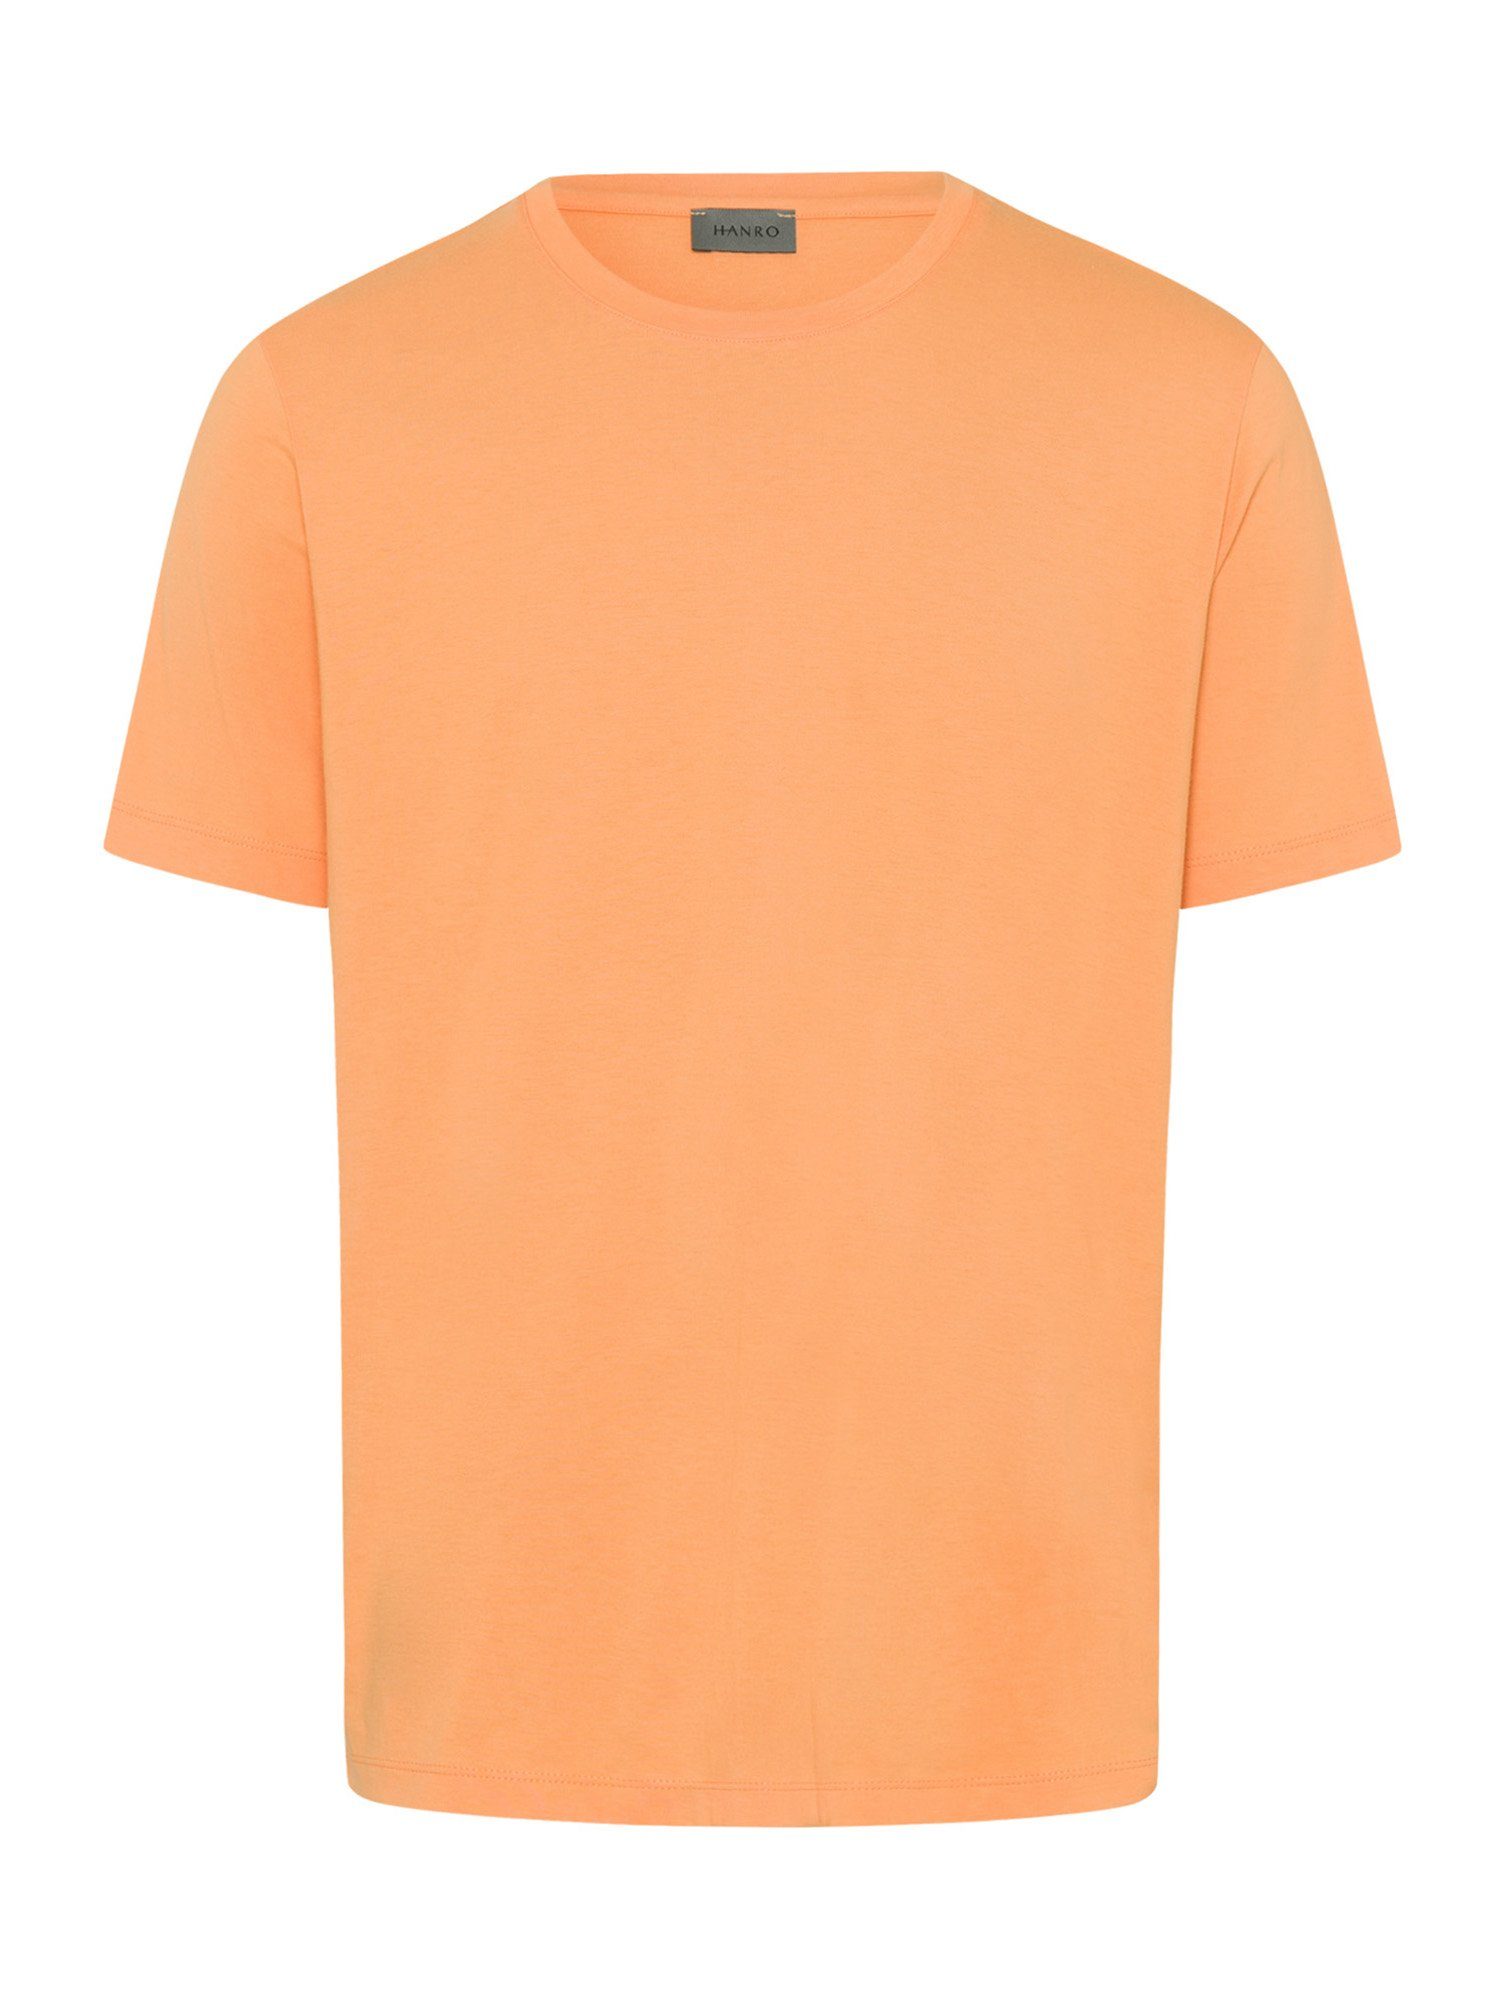 T-Shirt Shirts Living Hanro tangerine